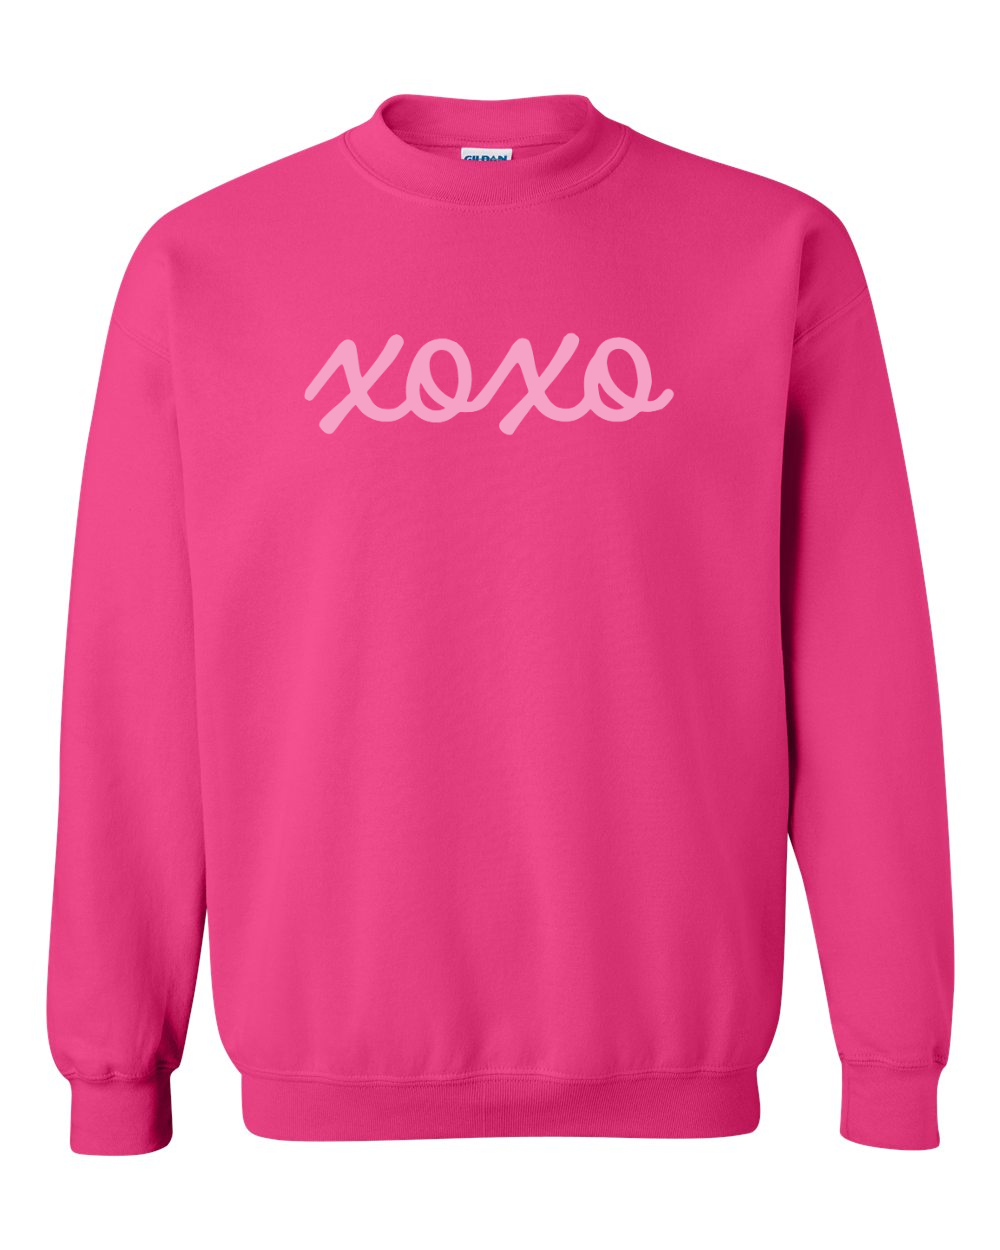 XOXO Script Sweatshirt